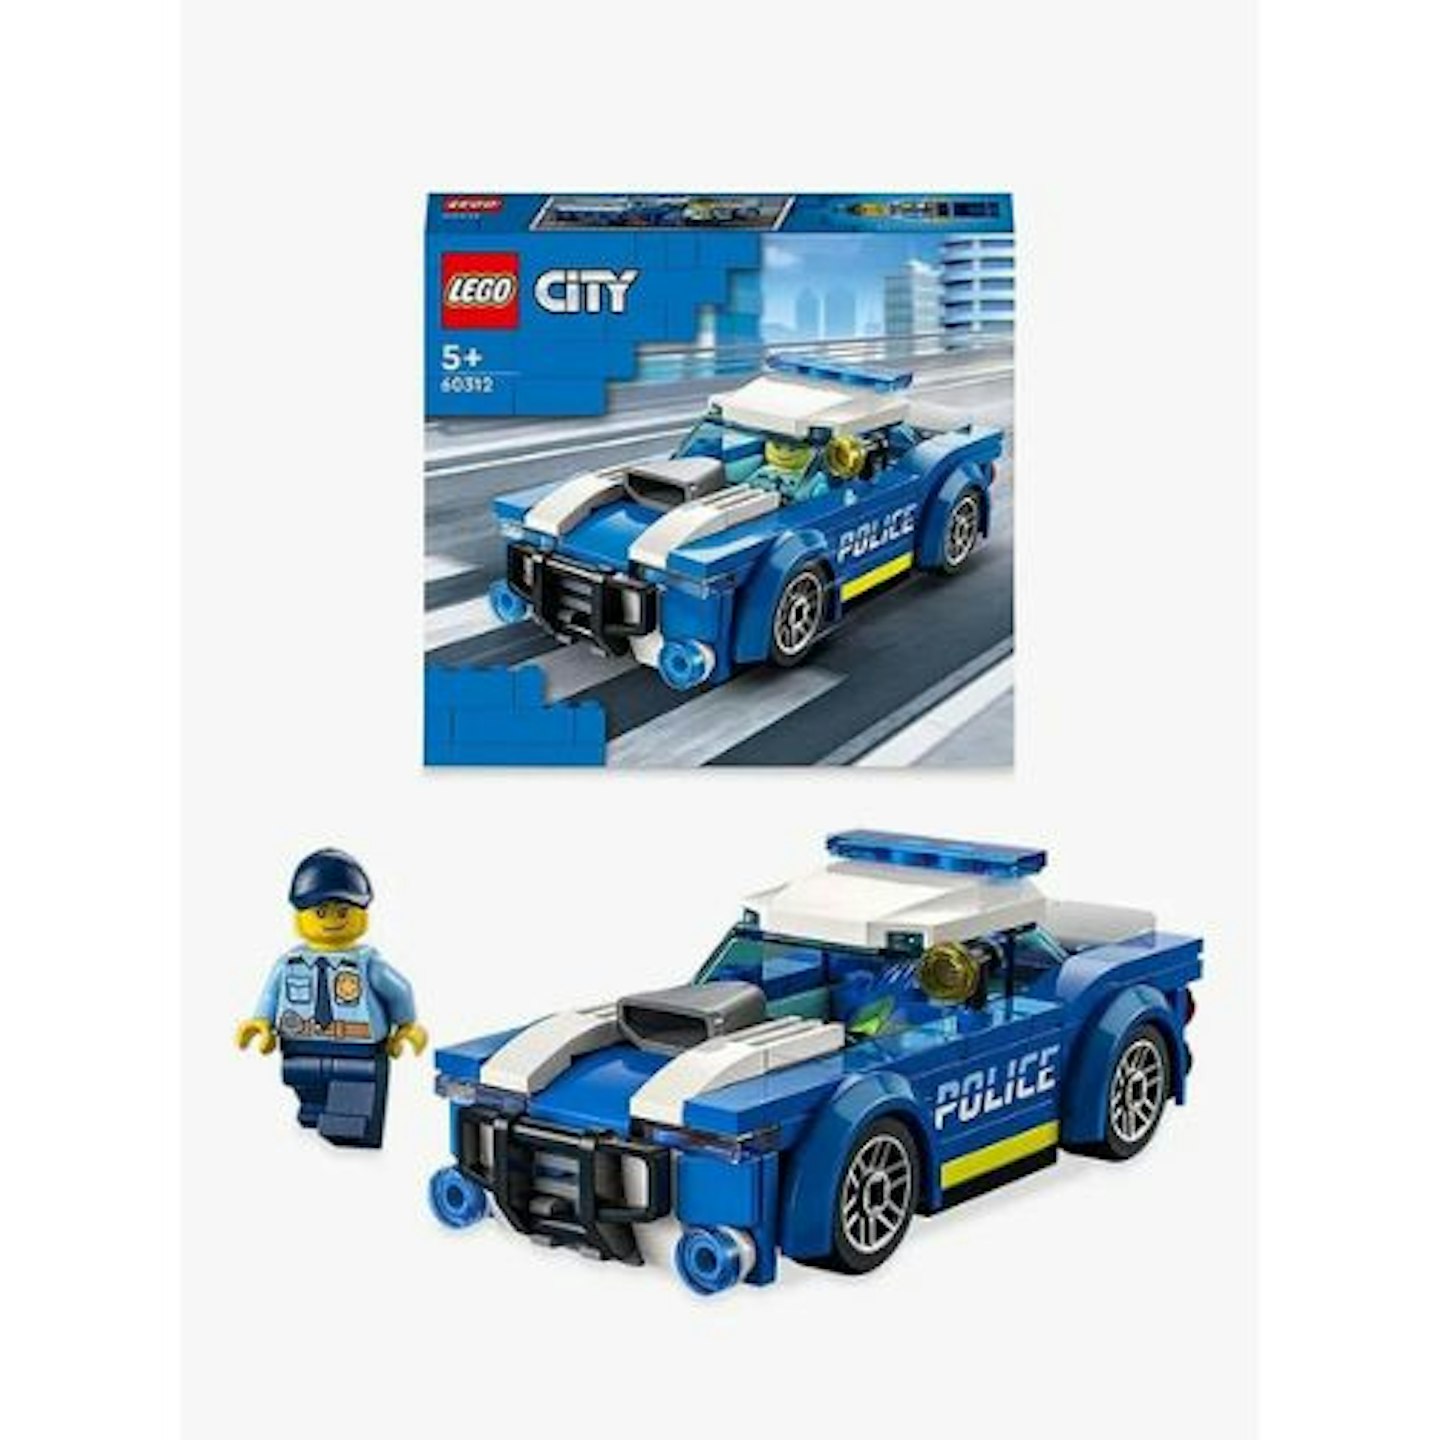 Best Children's Toy : LEGO City 60312 Police Car